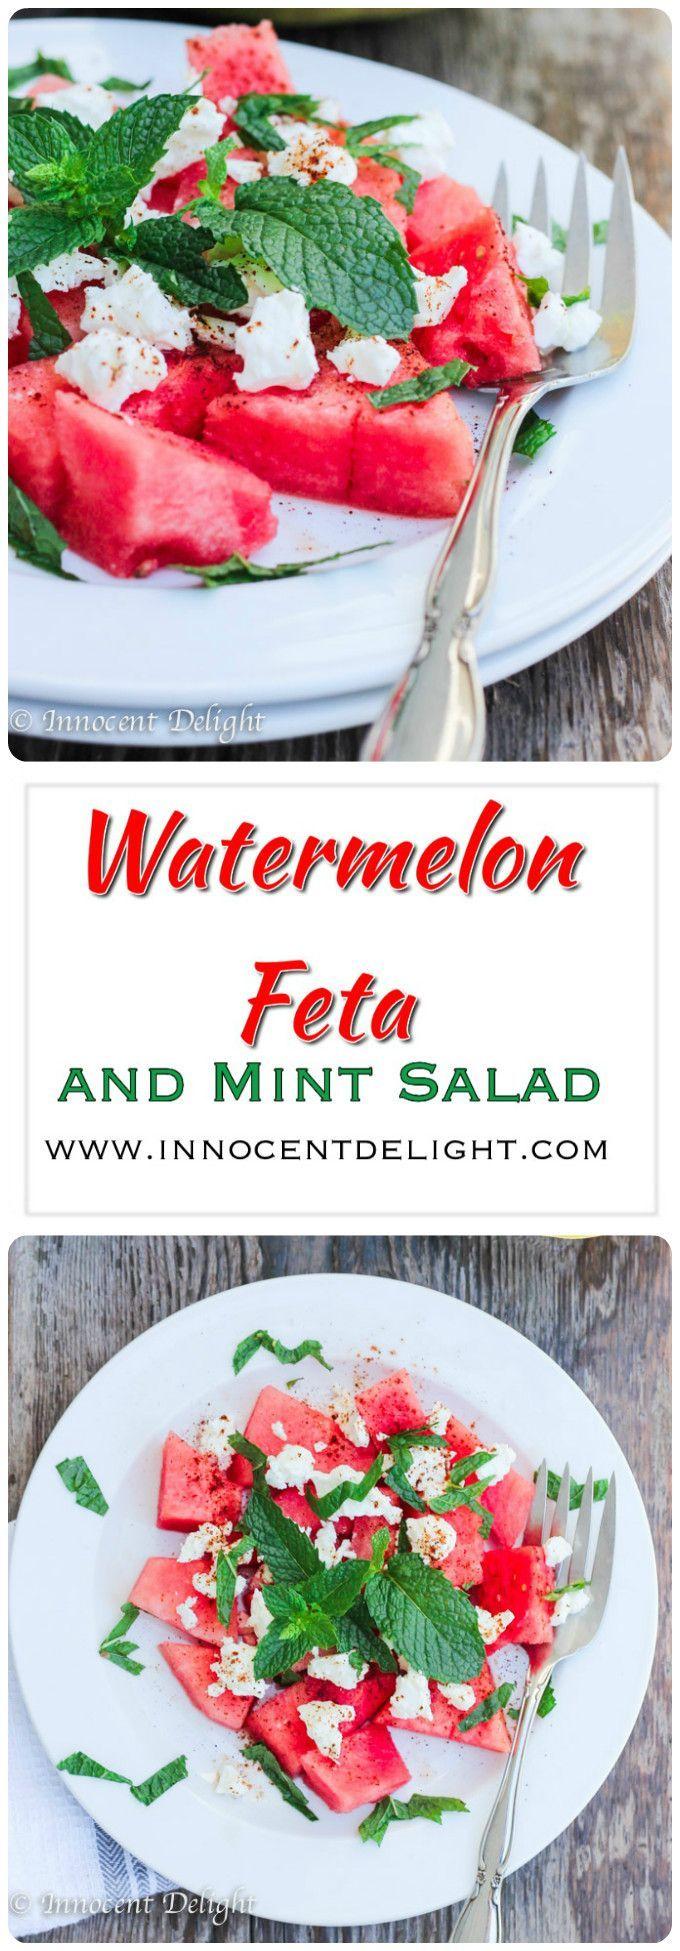 Wedding - Watermelon Feta And Mint Salad